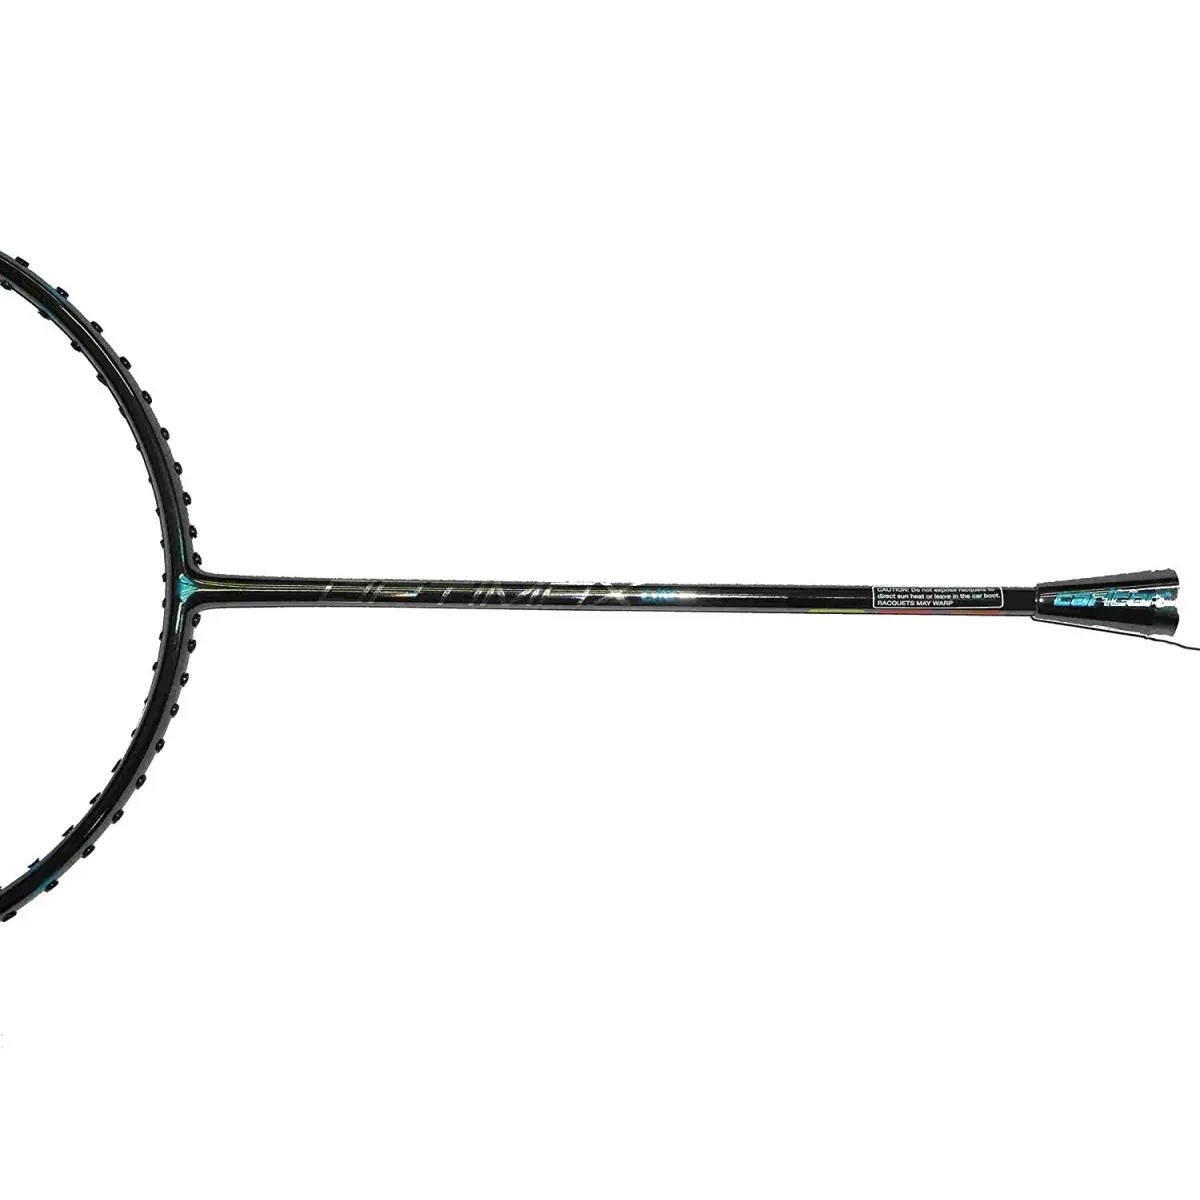 New Model Carlton Optimax Lite Badminton Racquet Free String and Grip 